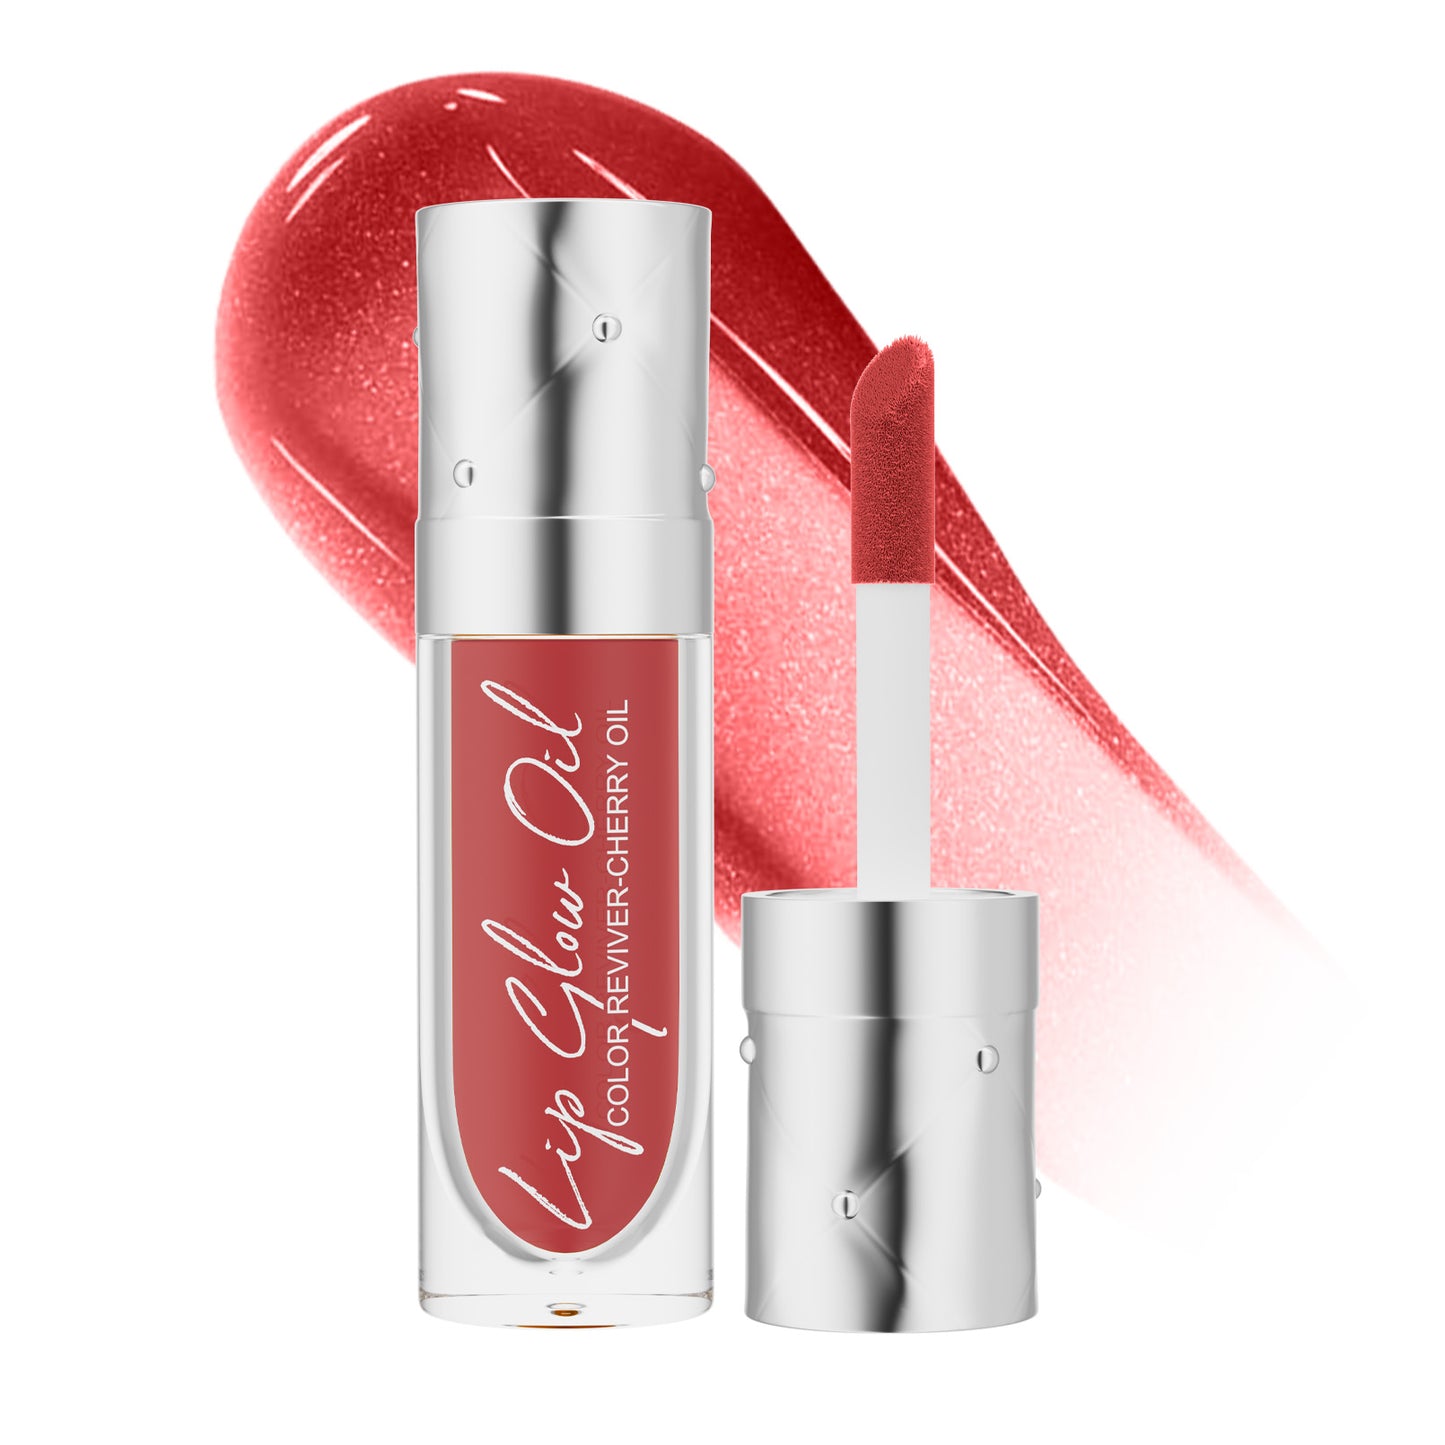 Koroole Lip Color Oil Color Reviewer-Cherry Oil 5 Color & 5 Color Lip Gloss Makeup